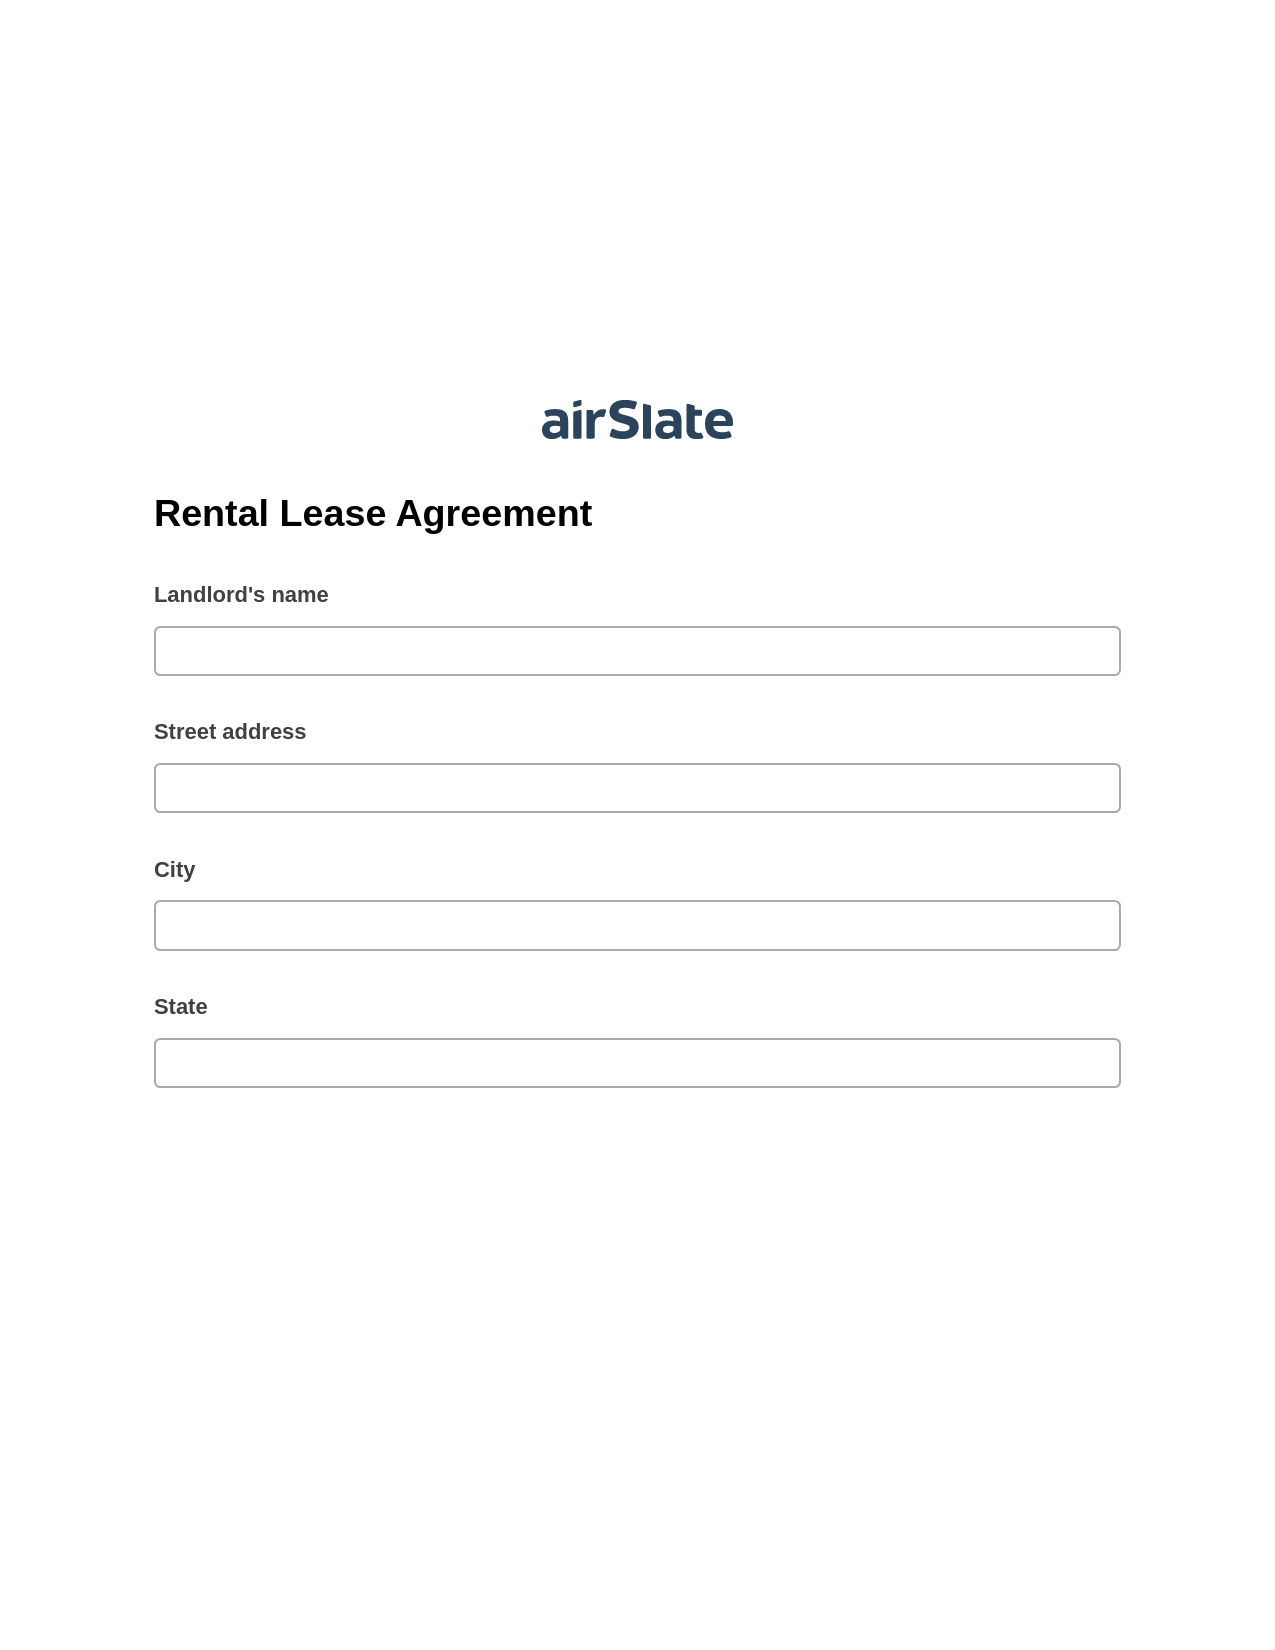 Rental Lease Agreement Pre-fill from Google Sheet Dropdown Options Bot, Google Cloud Print Bot, Google Drive Bot